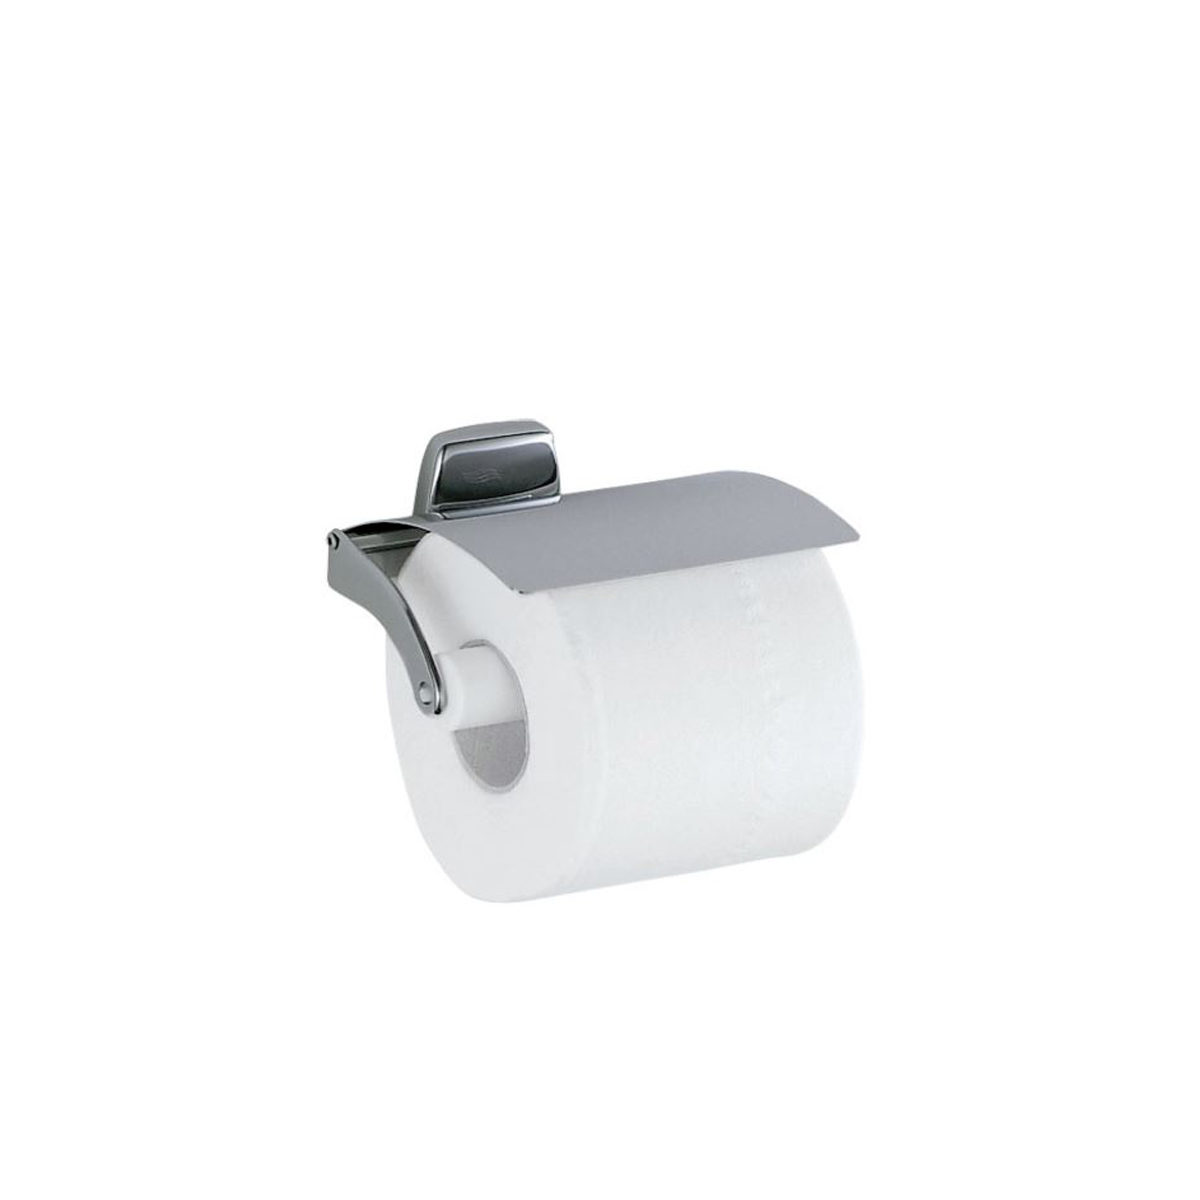 Spare Toilet Paper Holder